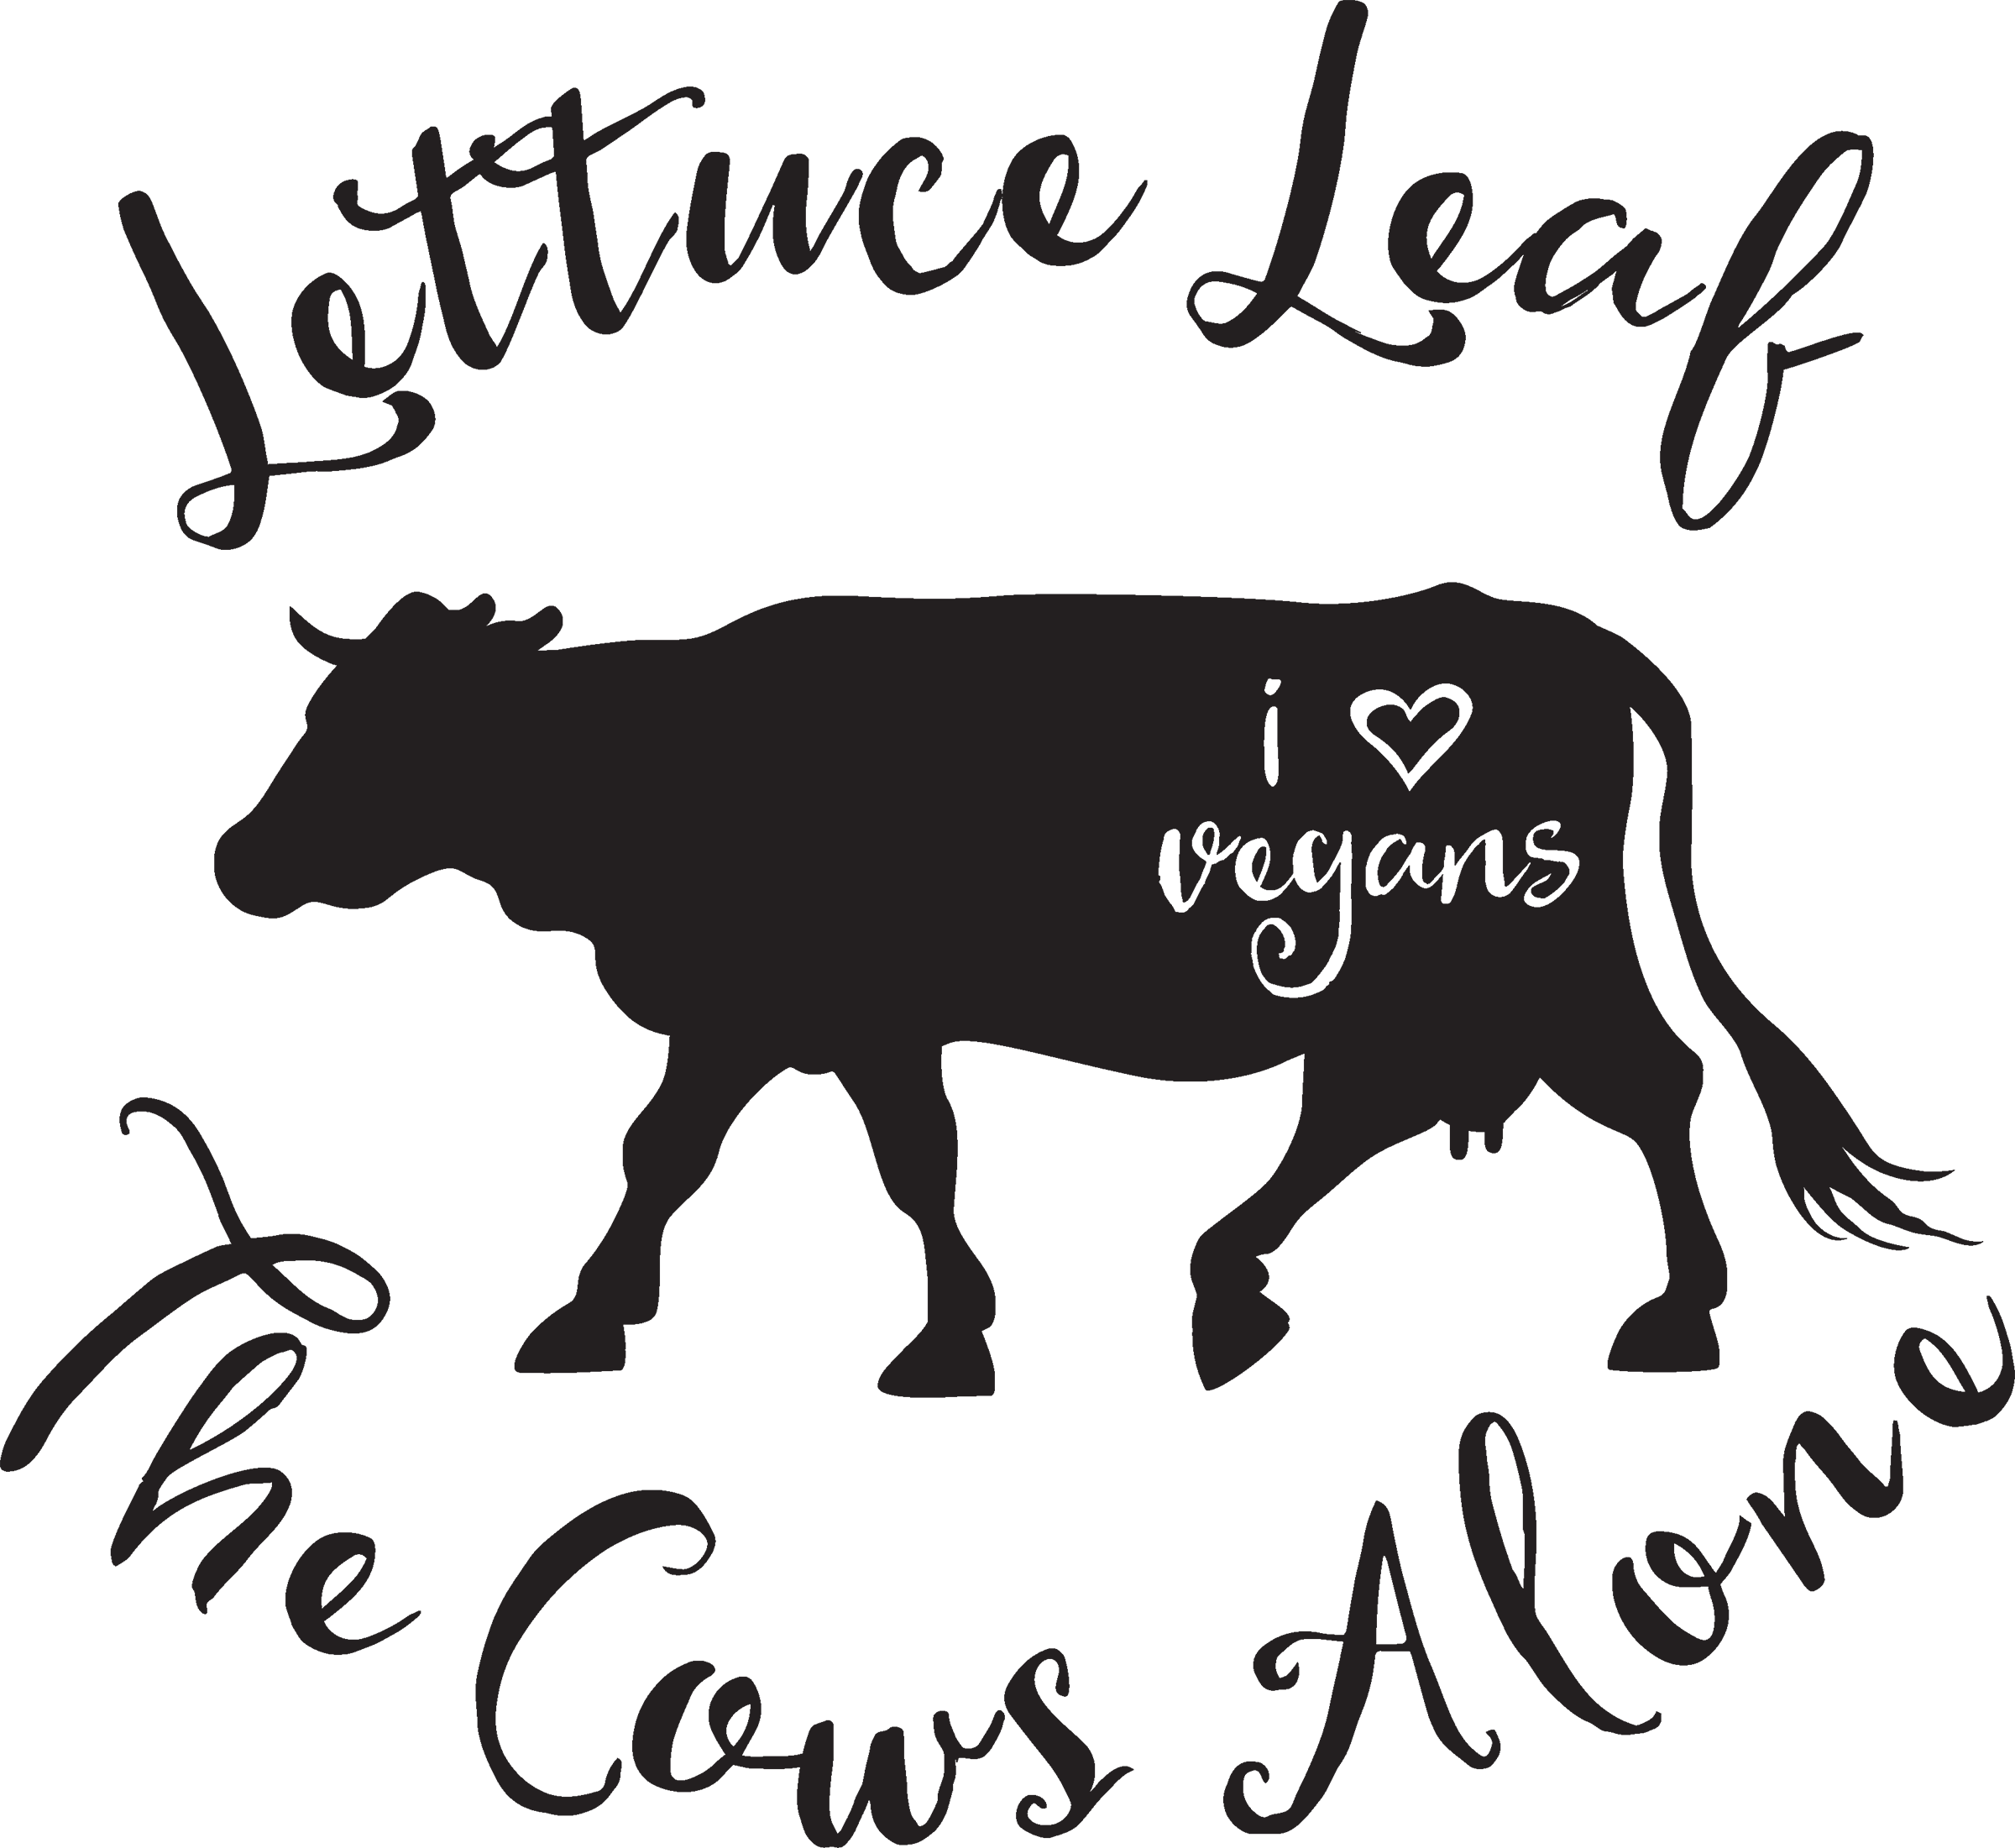 Ladies Junior Fit Tank - Lettuce Leaf The Cows Alone